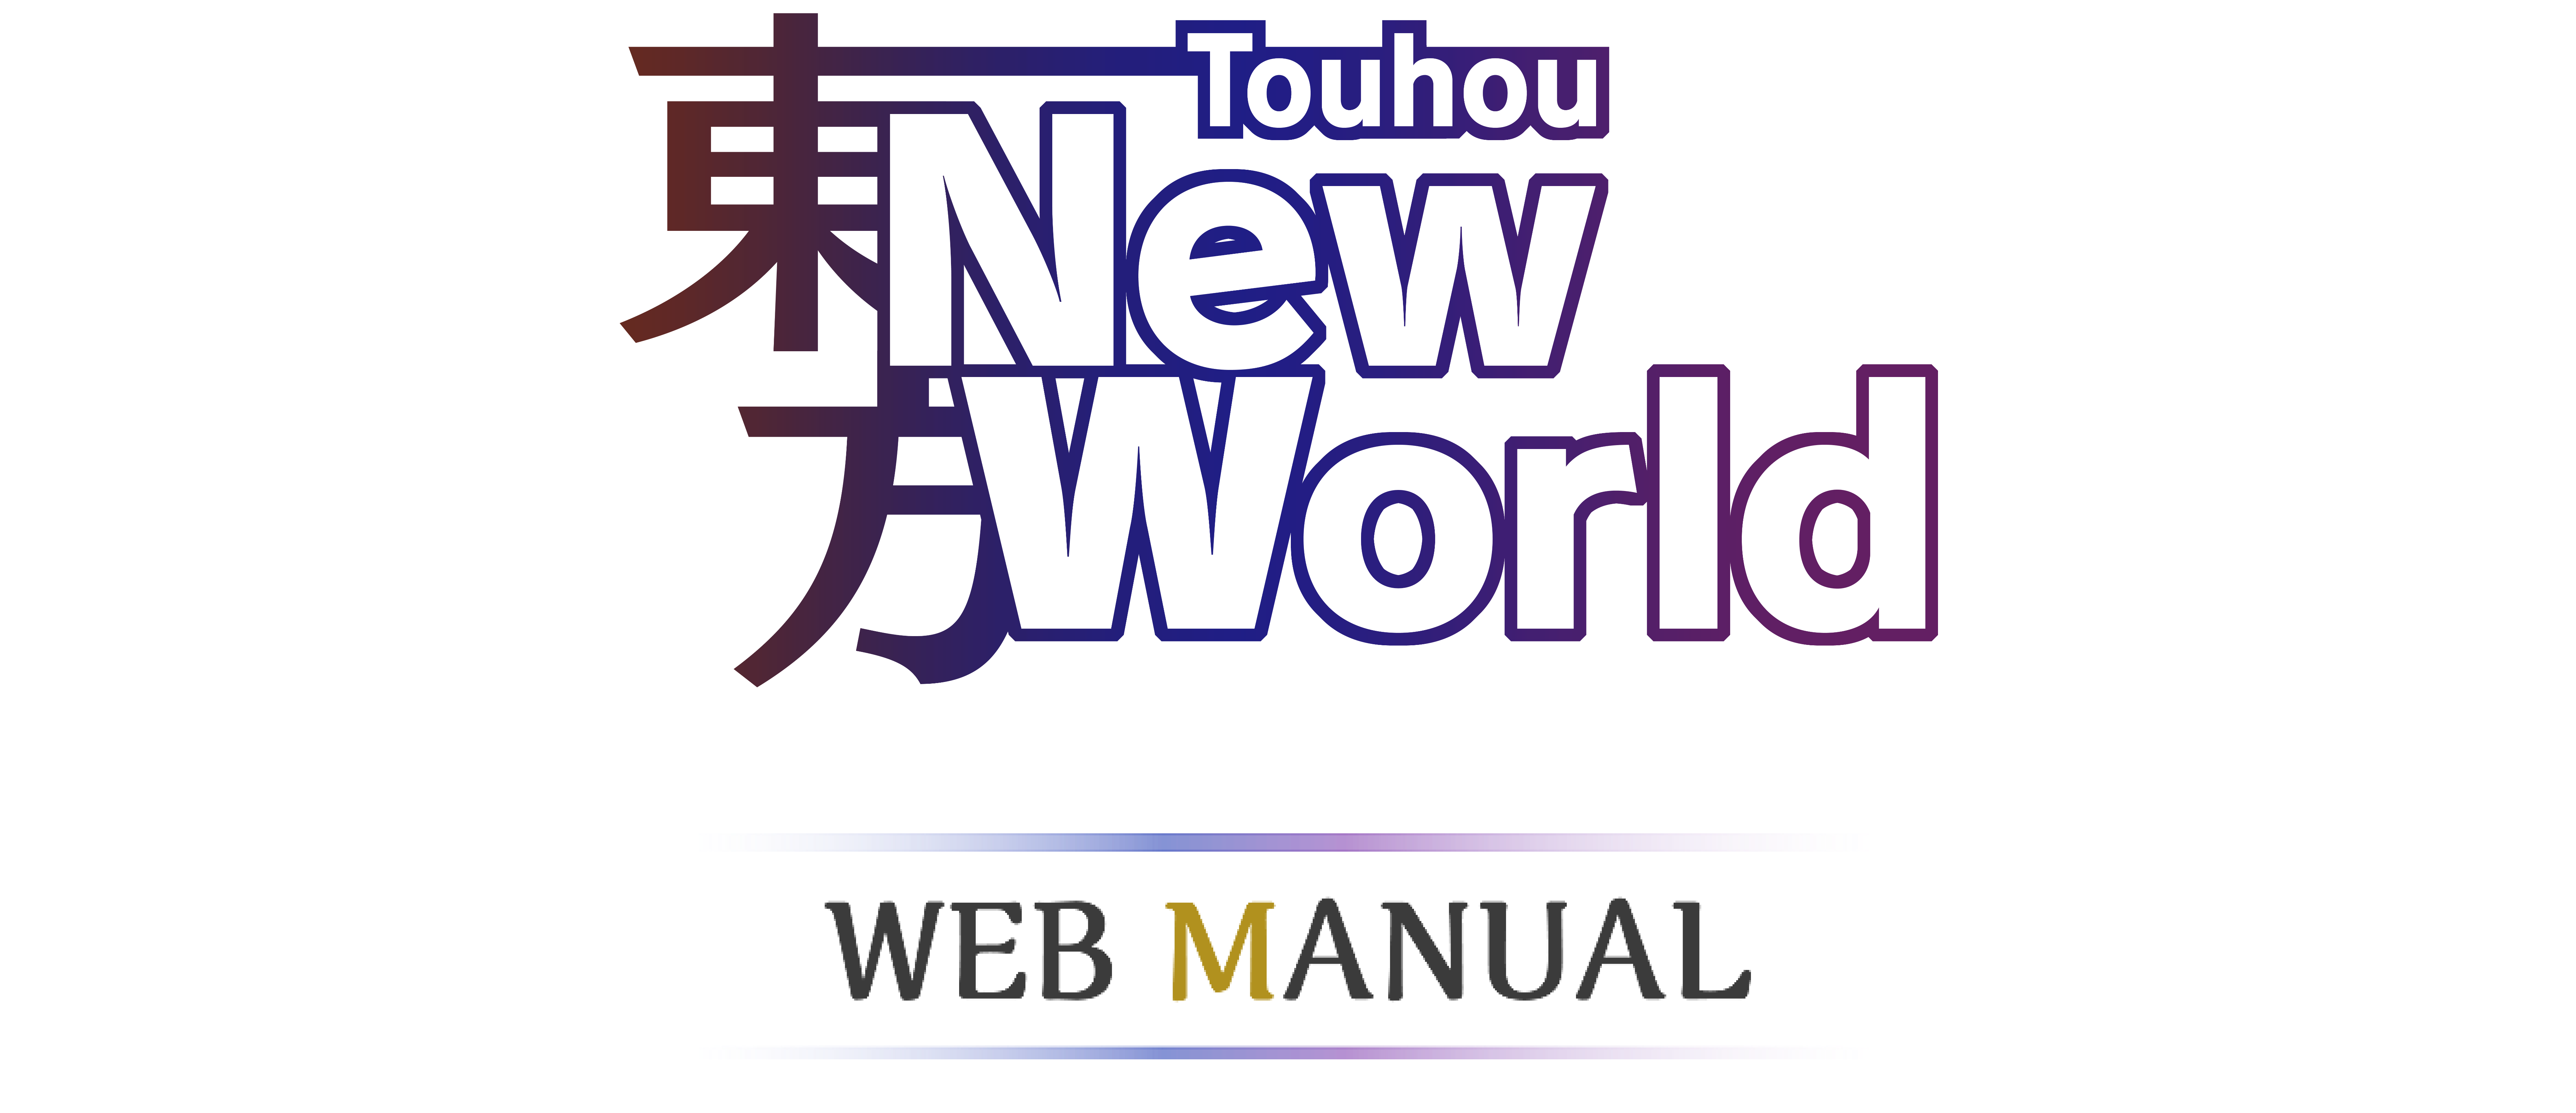 Touhou Web Manual